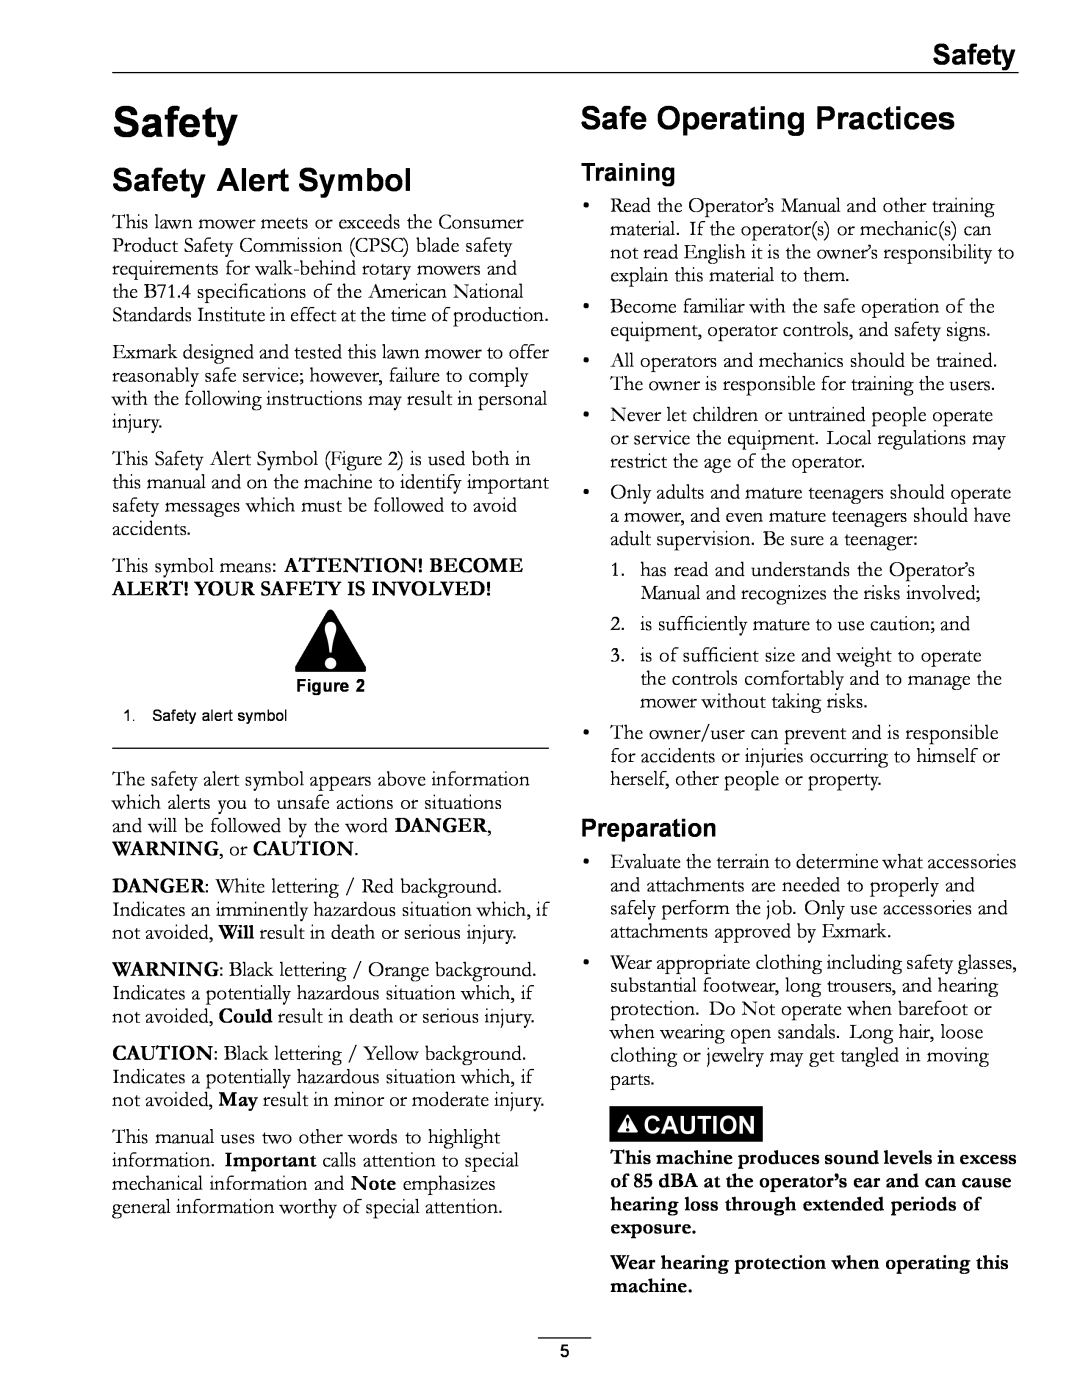 Exmark 4500-686 Rev. B manual Safety Alert Symbol, Safe Operating Practices, Training, Preparation 